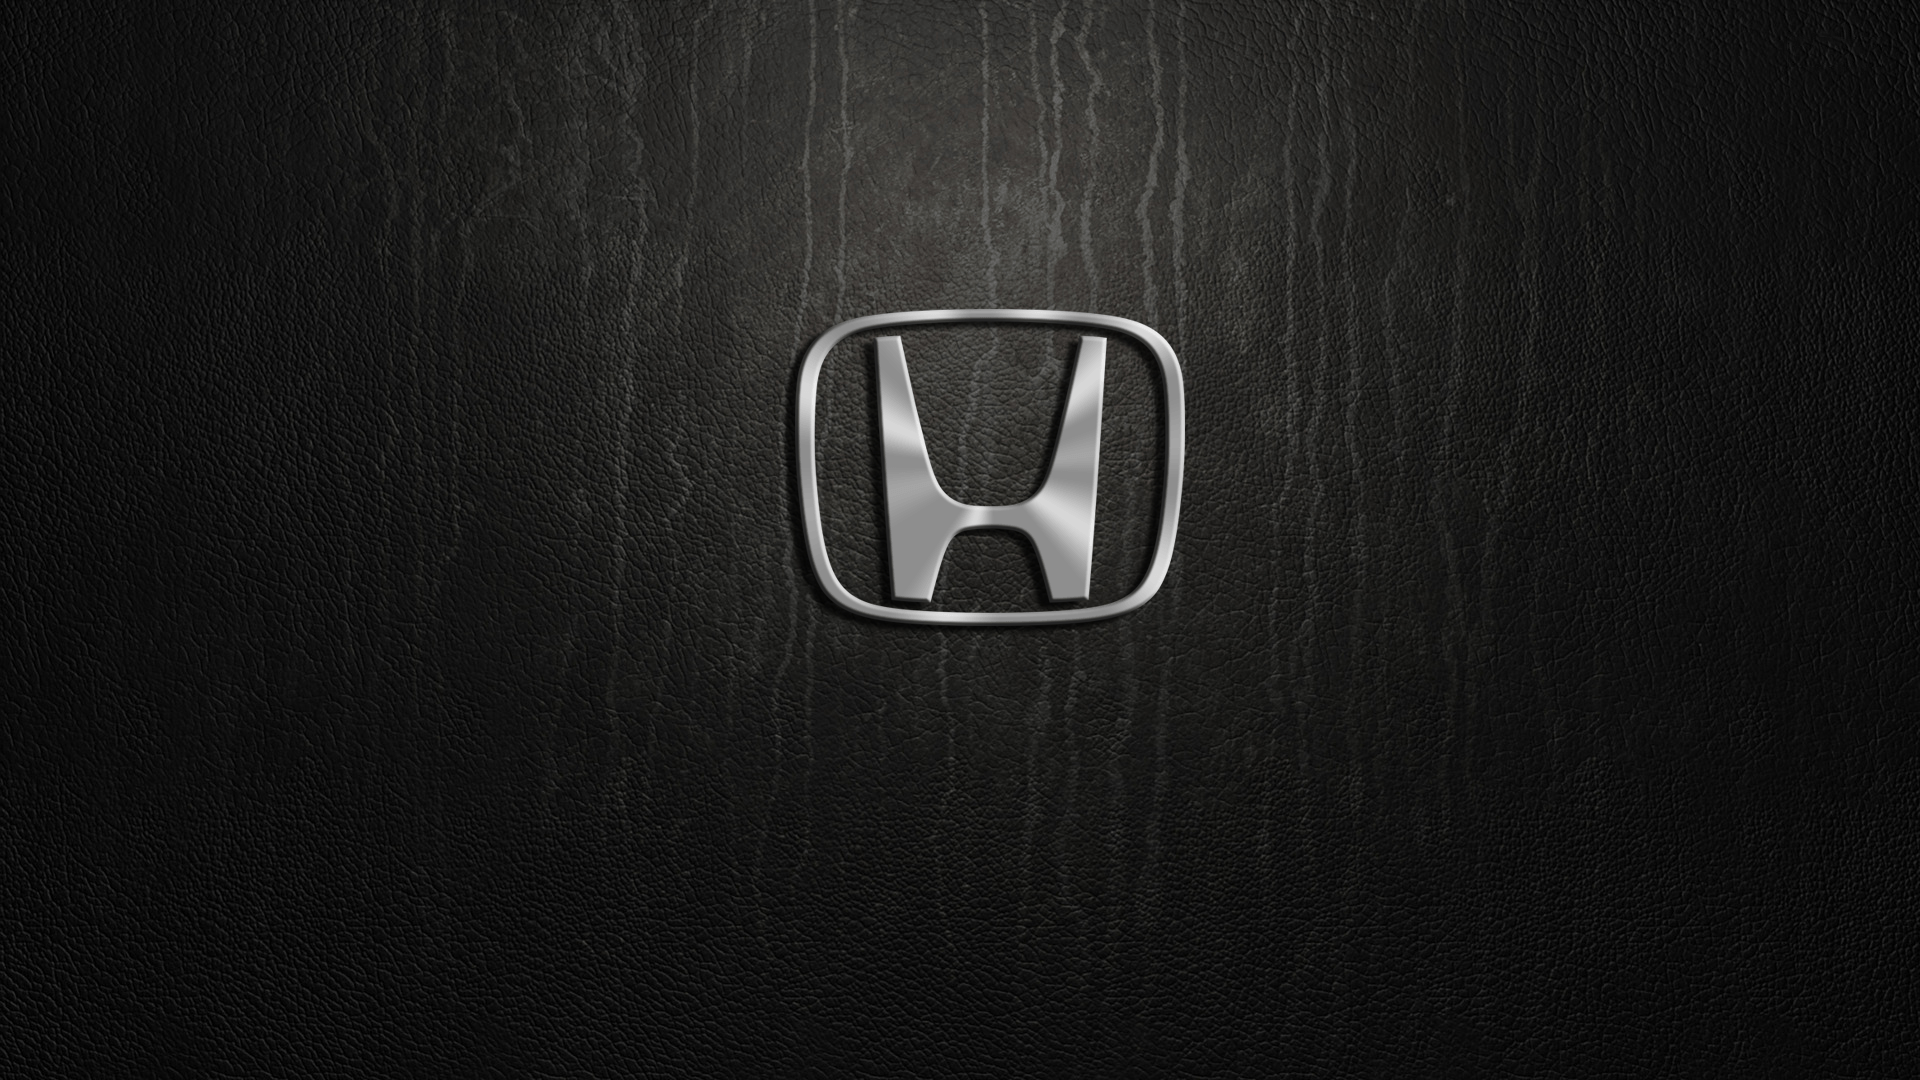 Honda HD Wallpaper and Background Image